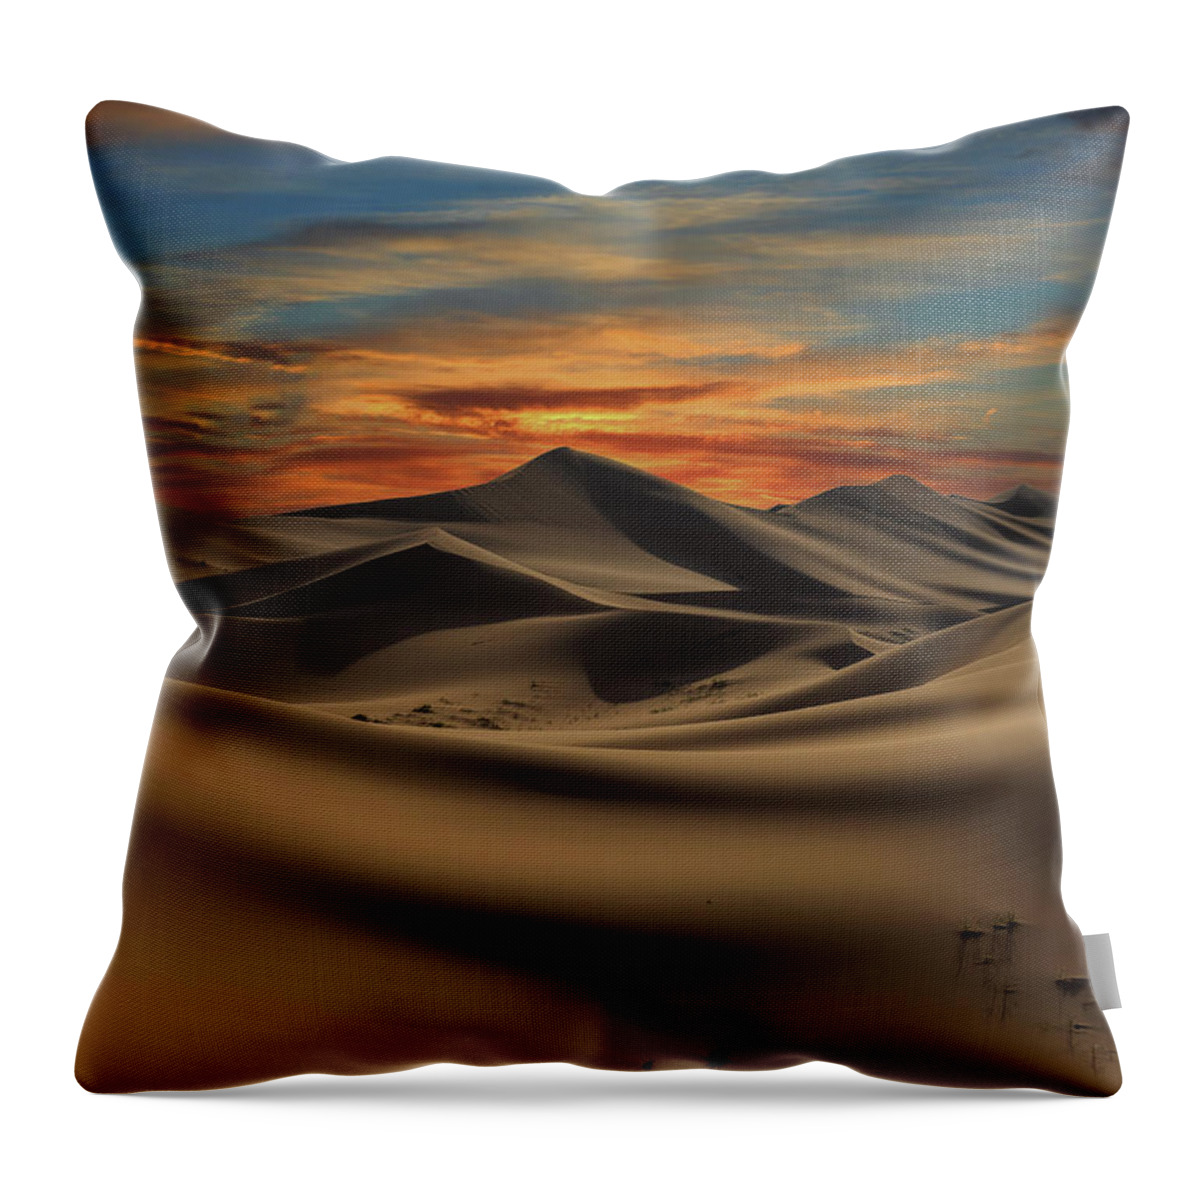 Desert Throw Pillow featuring the photograph Dramatic Sunset In Desert by Mikhail Kokhanchikov